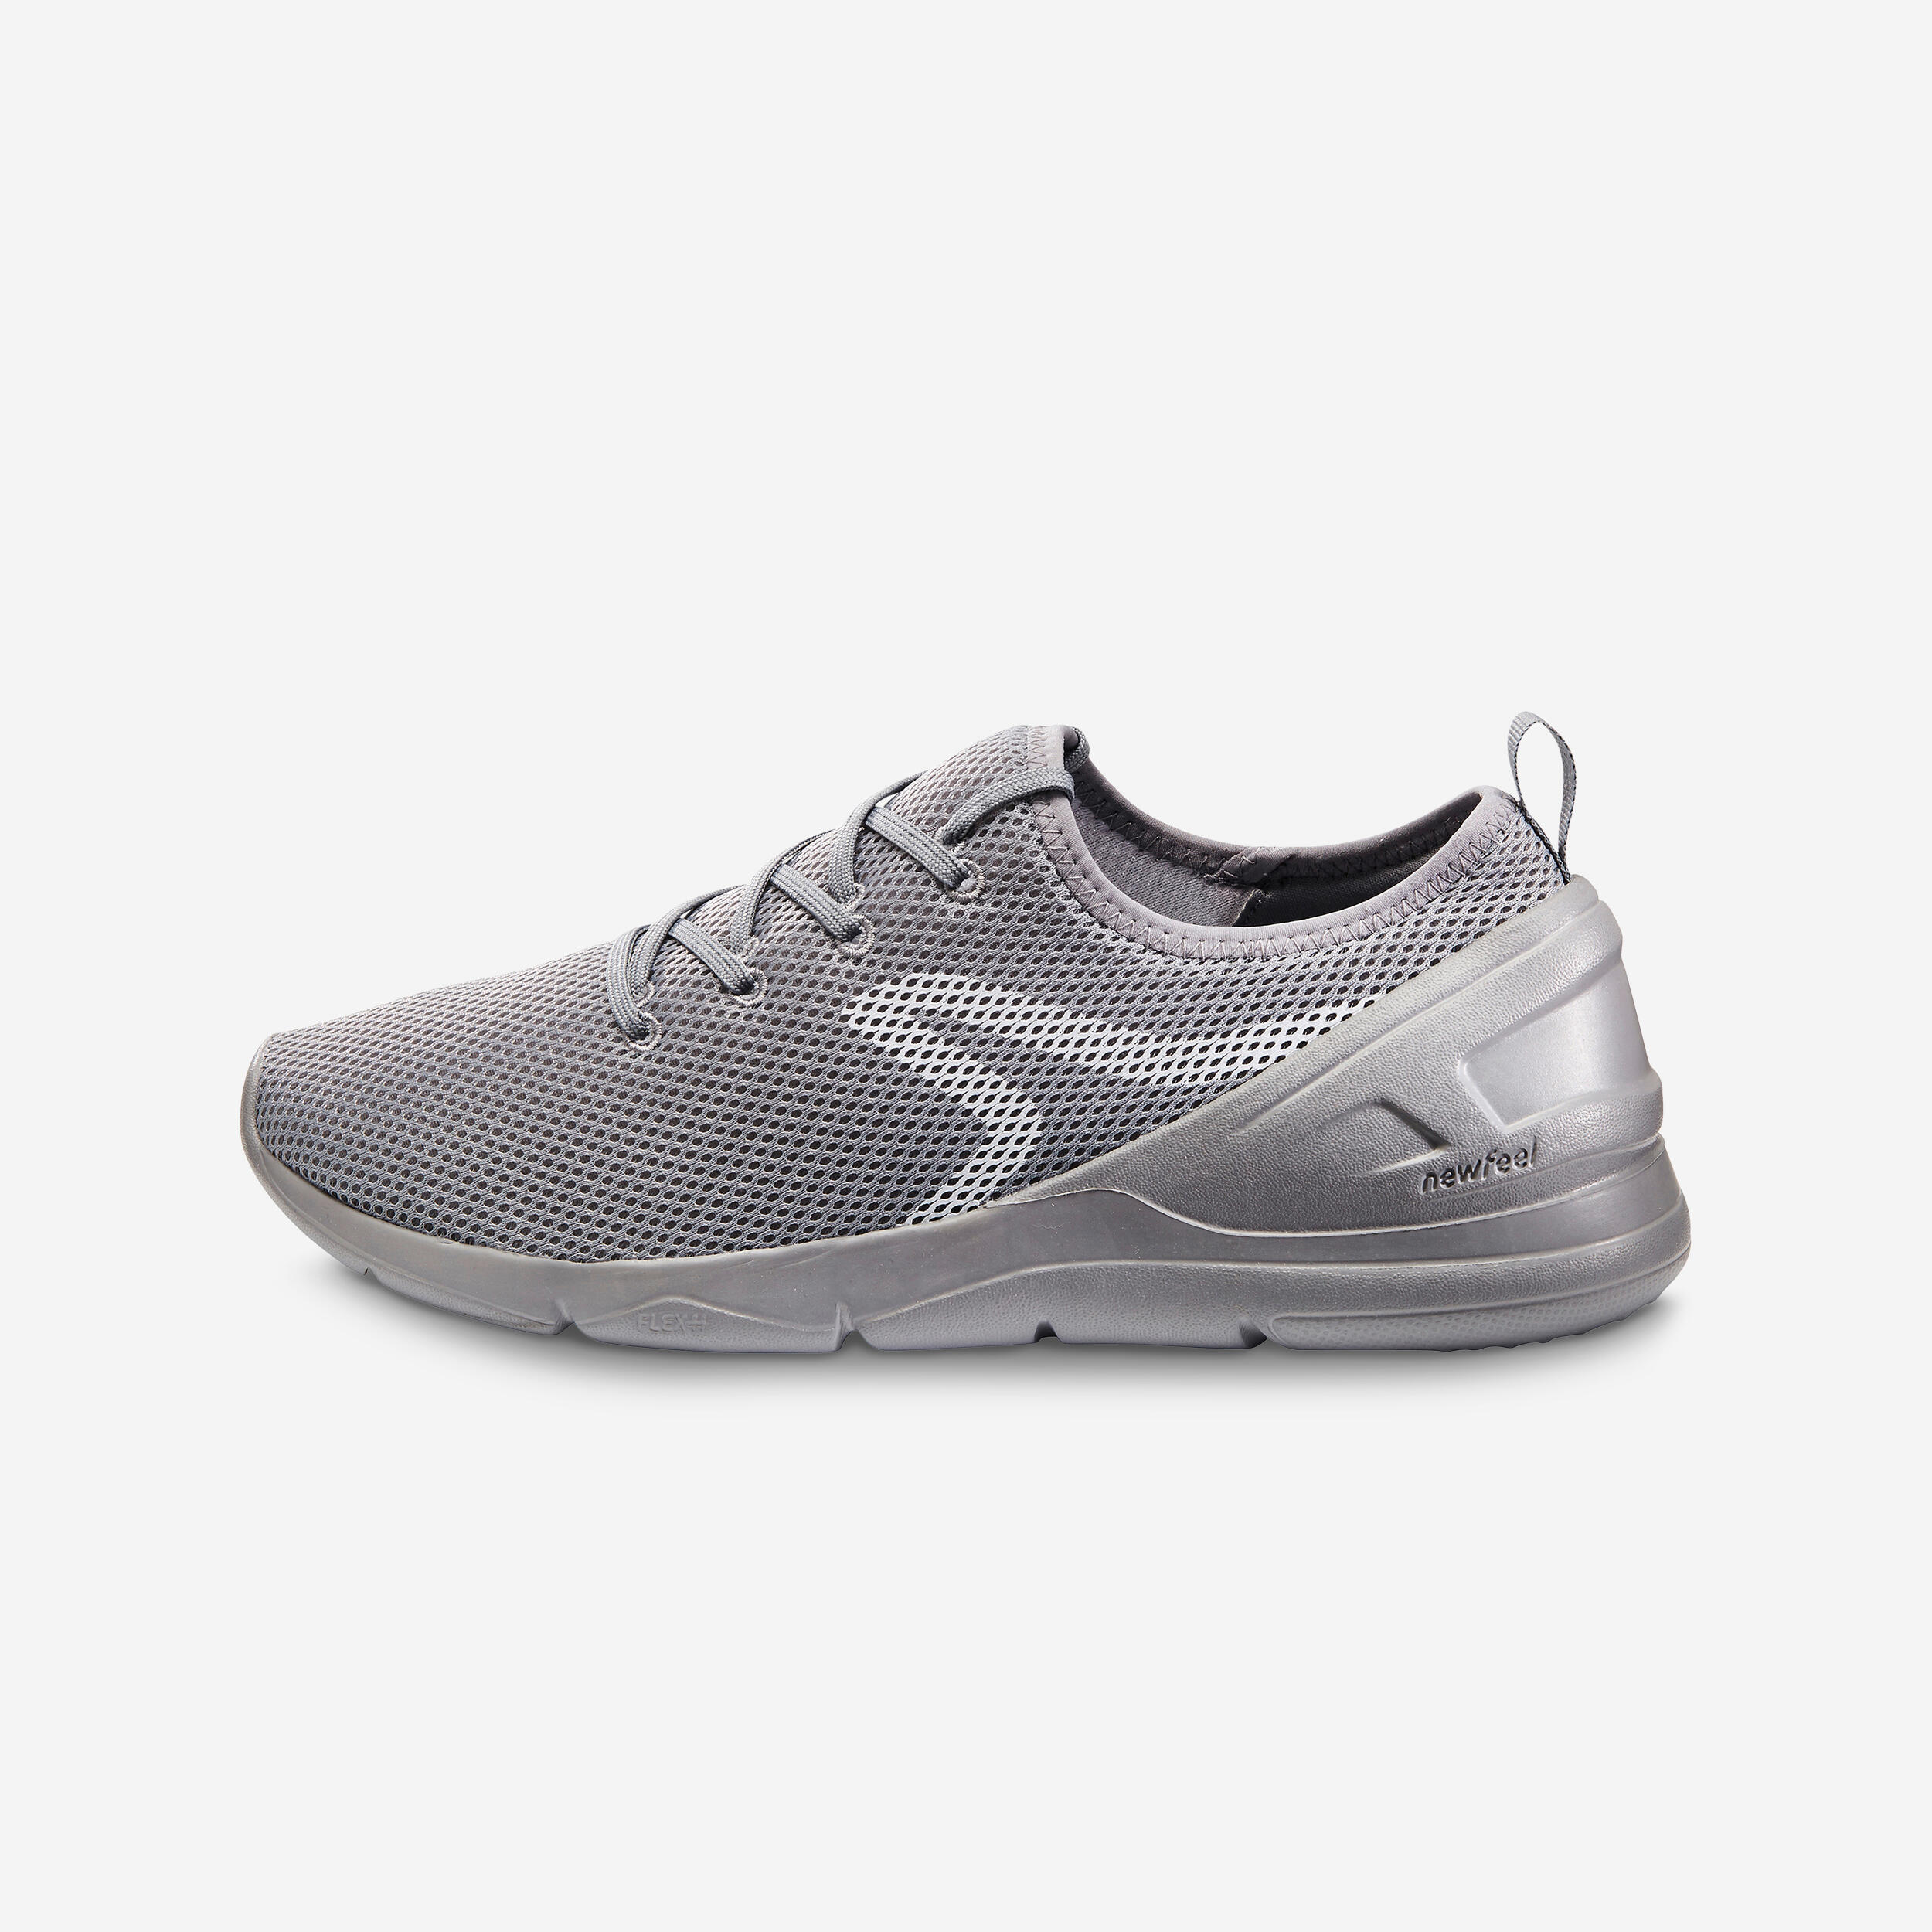 NEWFEEL Men's Urban Walking Shoes PW 100 - grey